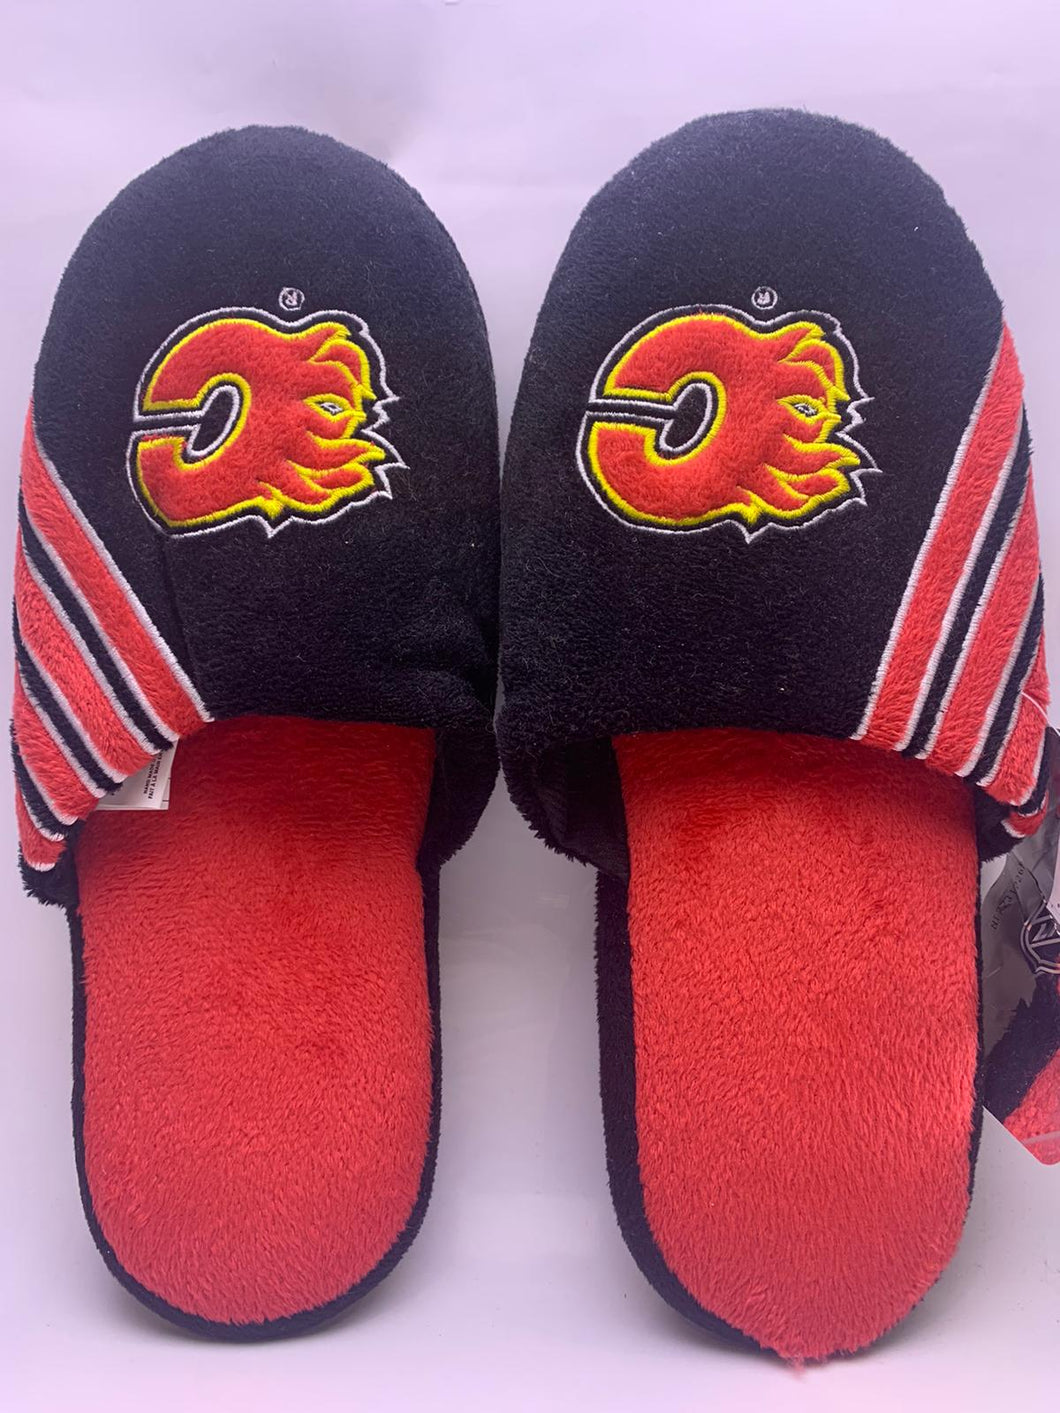 Calgary Flames Slippers